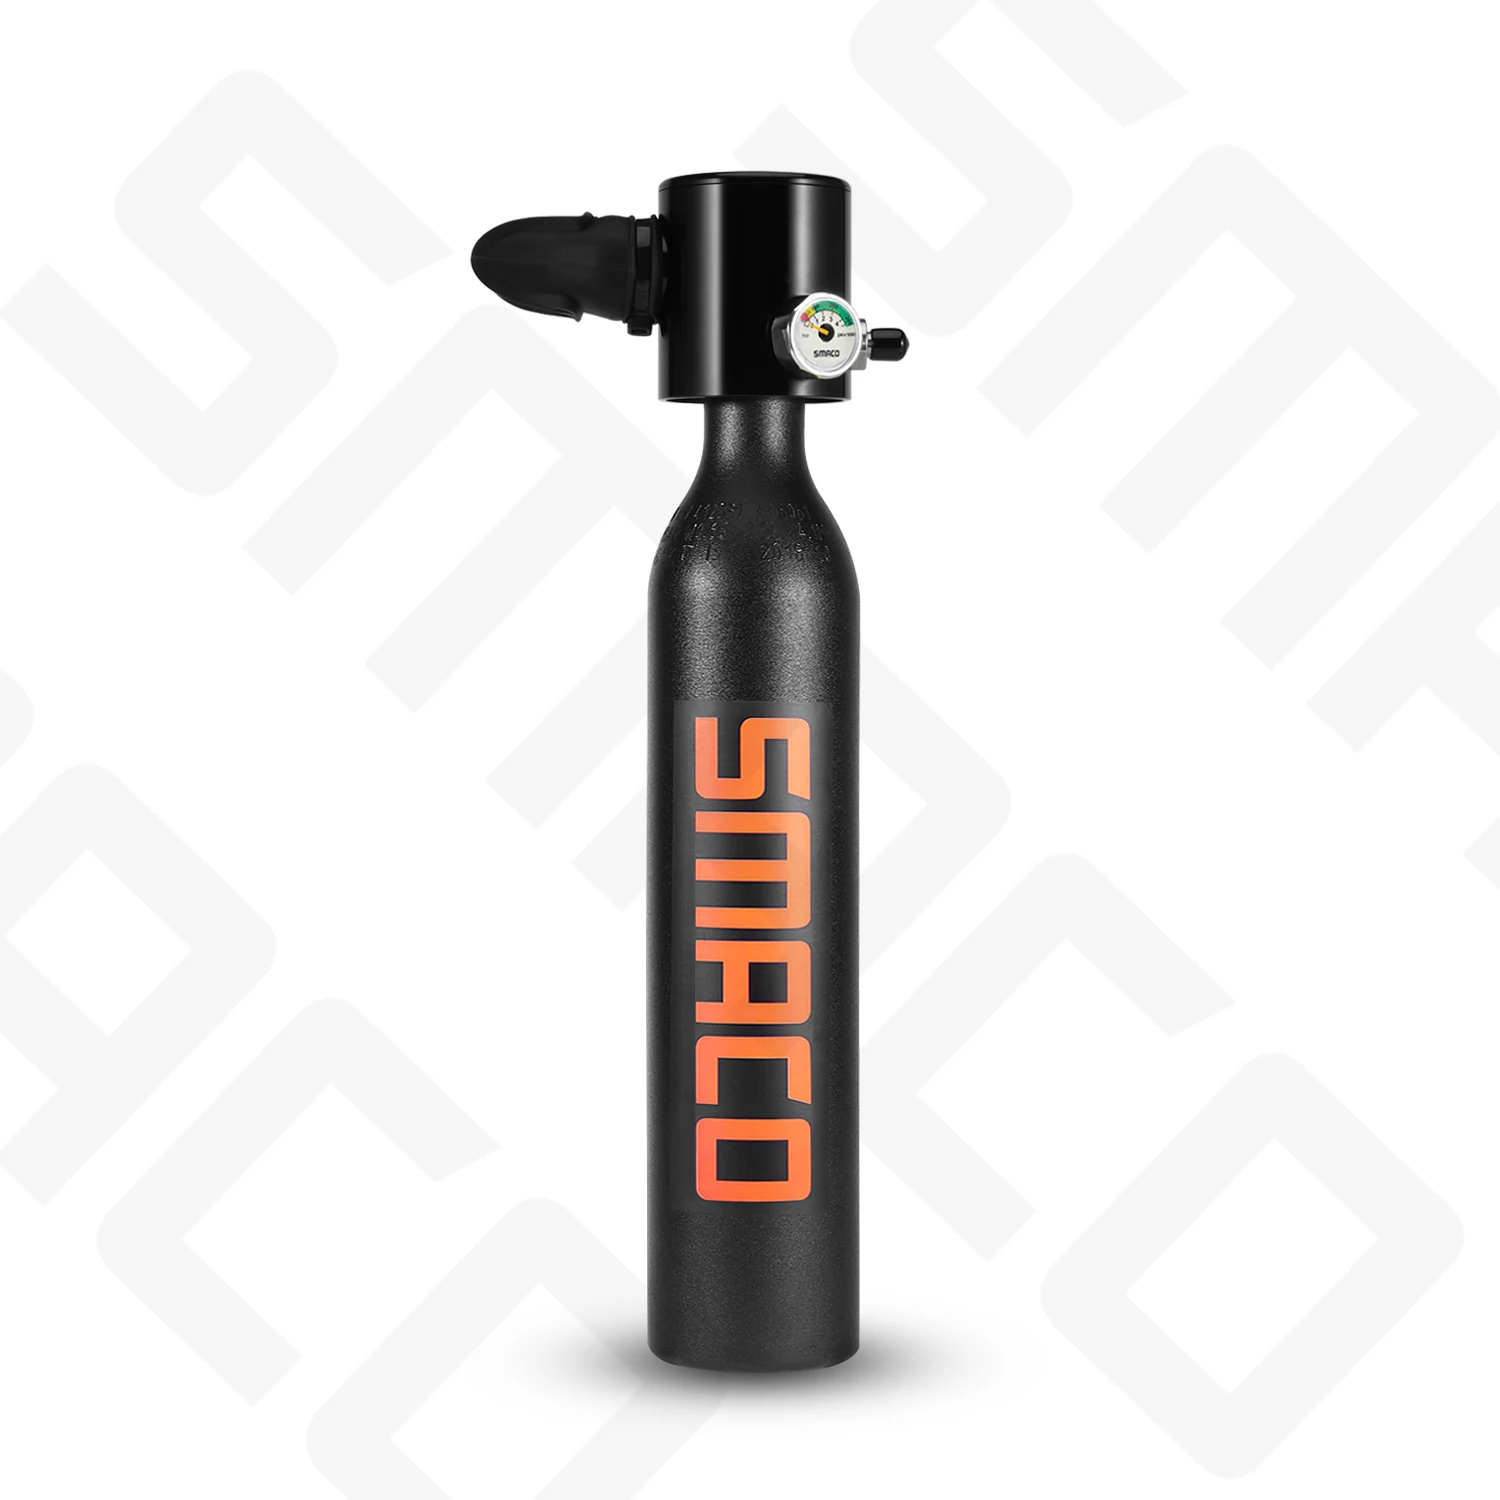 SMACO Diving Equipment oxygen cylinder set Mini scuba tank total freedom breath underwater for 5 إلى 10 الدقائق